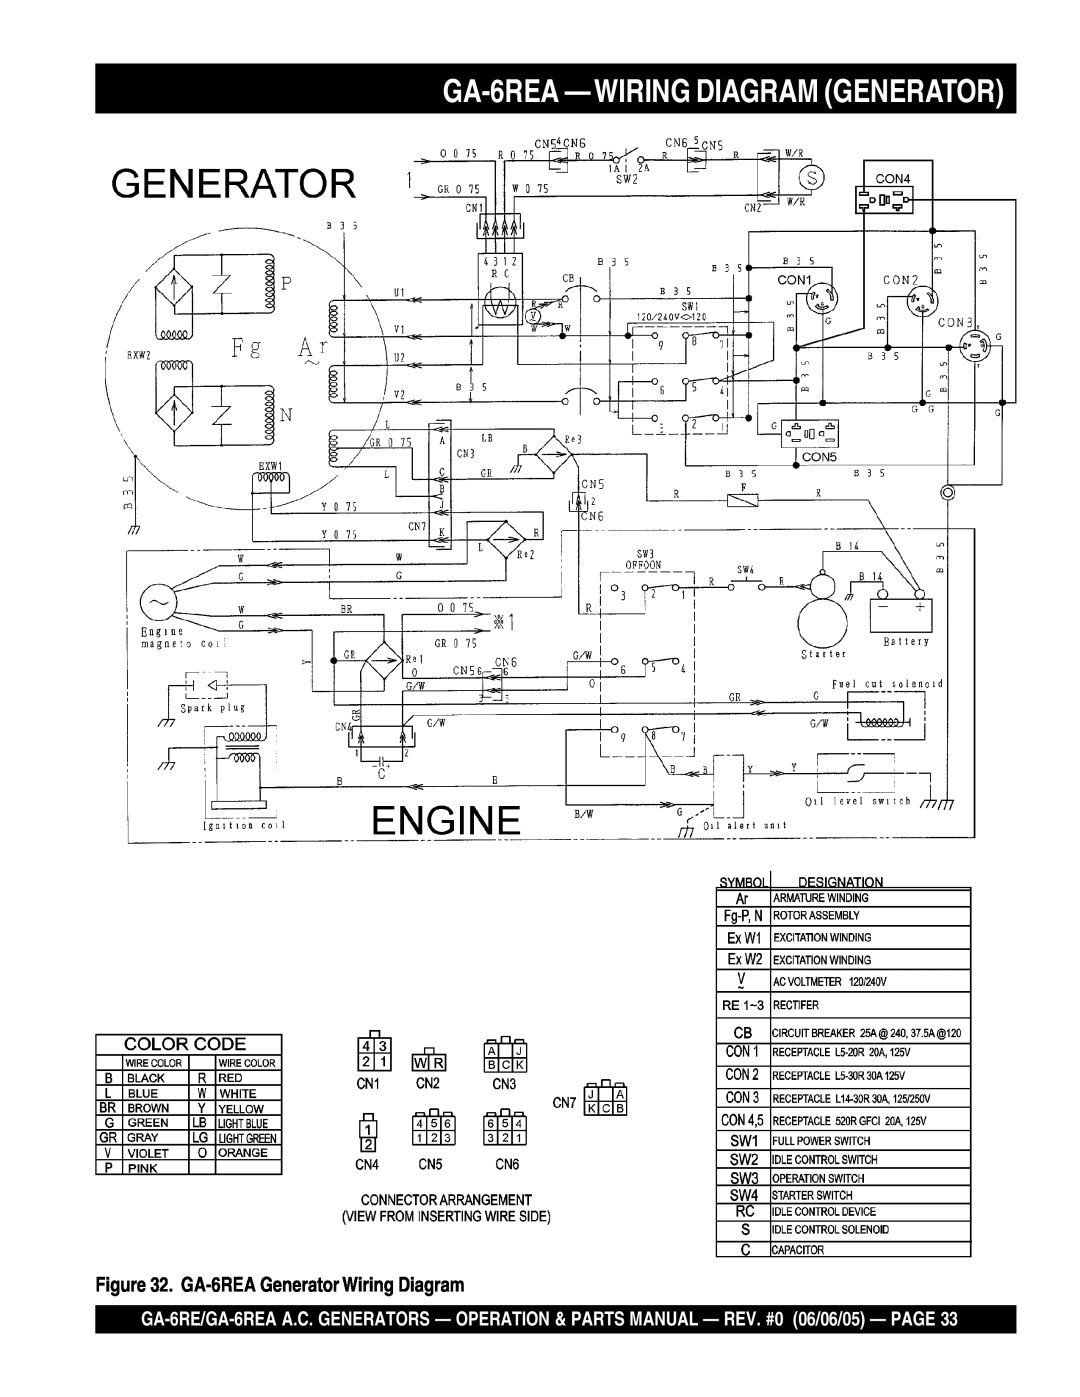 Multiquip manual GA-6REA -WIRINGDIAGRAM GENERATOR, GA-6REAGenerator Wiring Diagram 